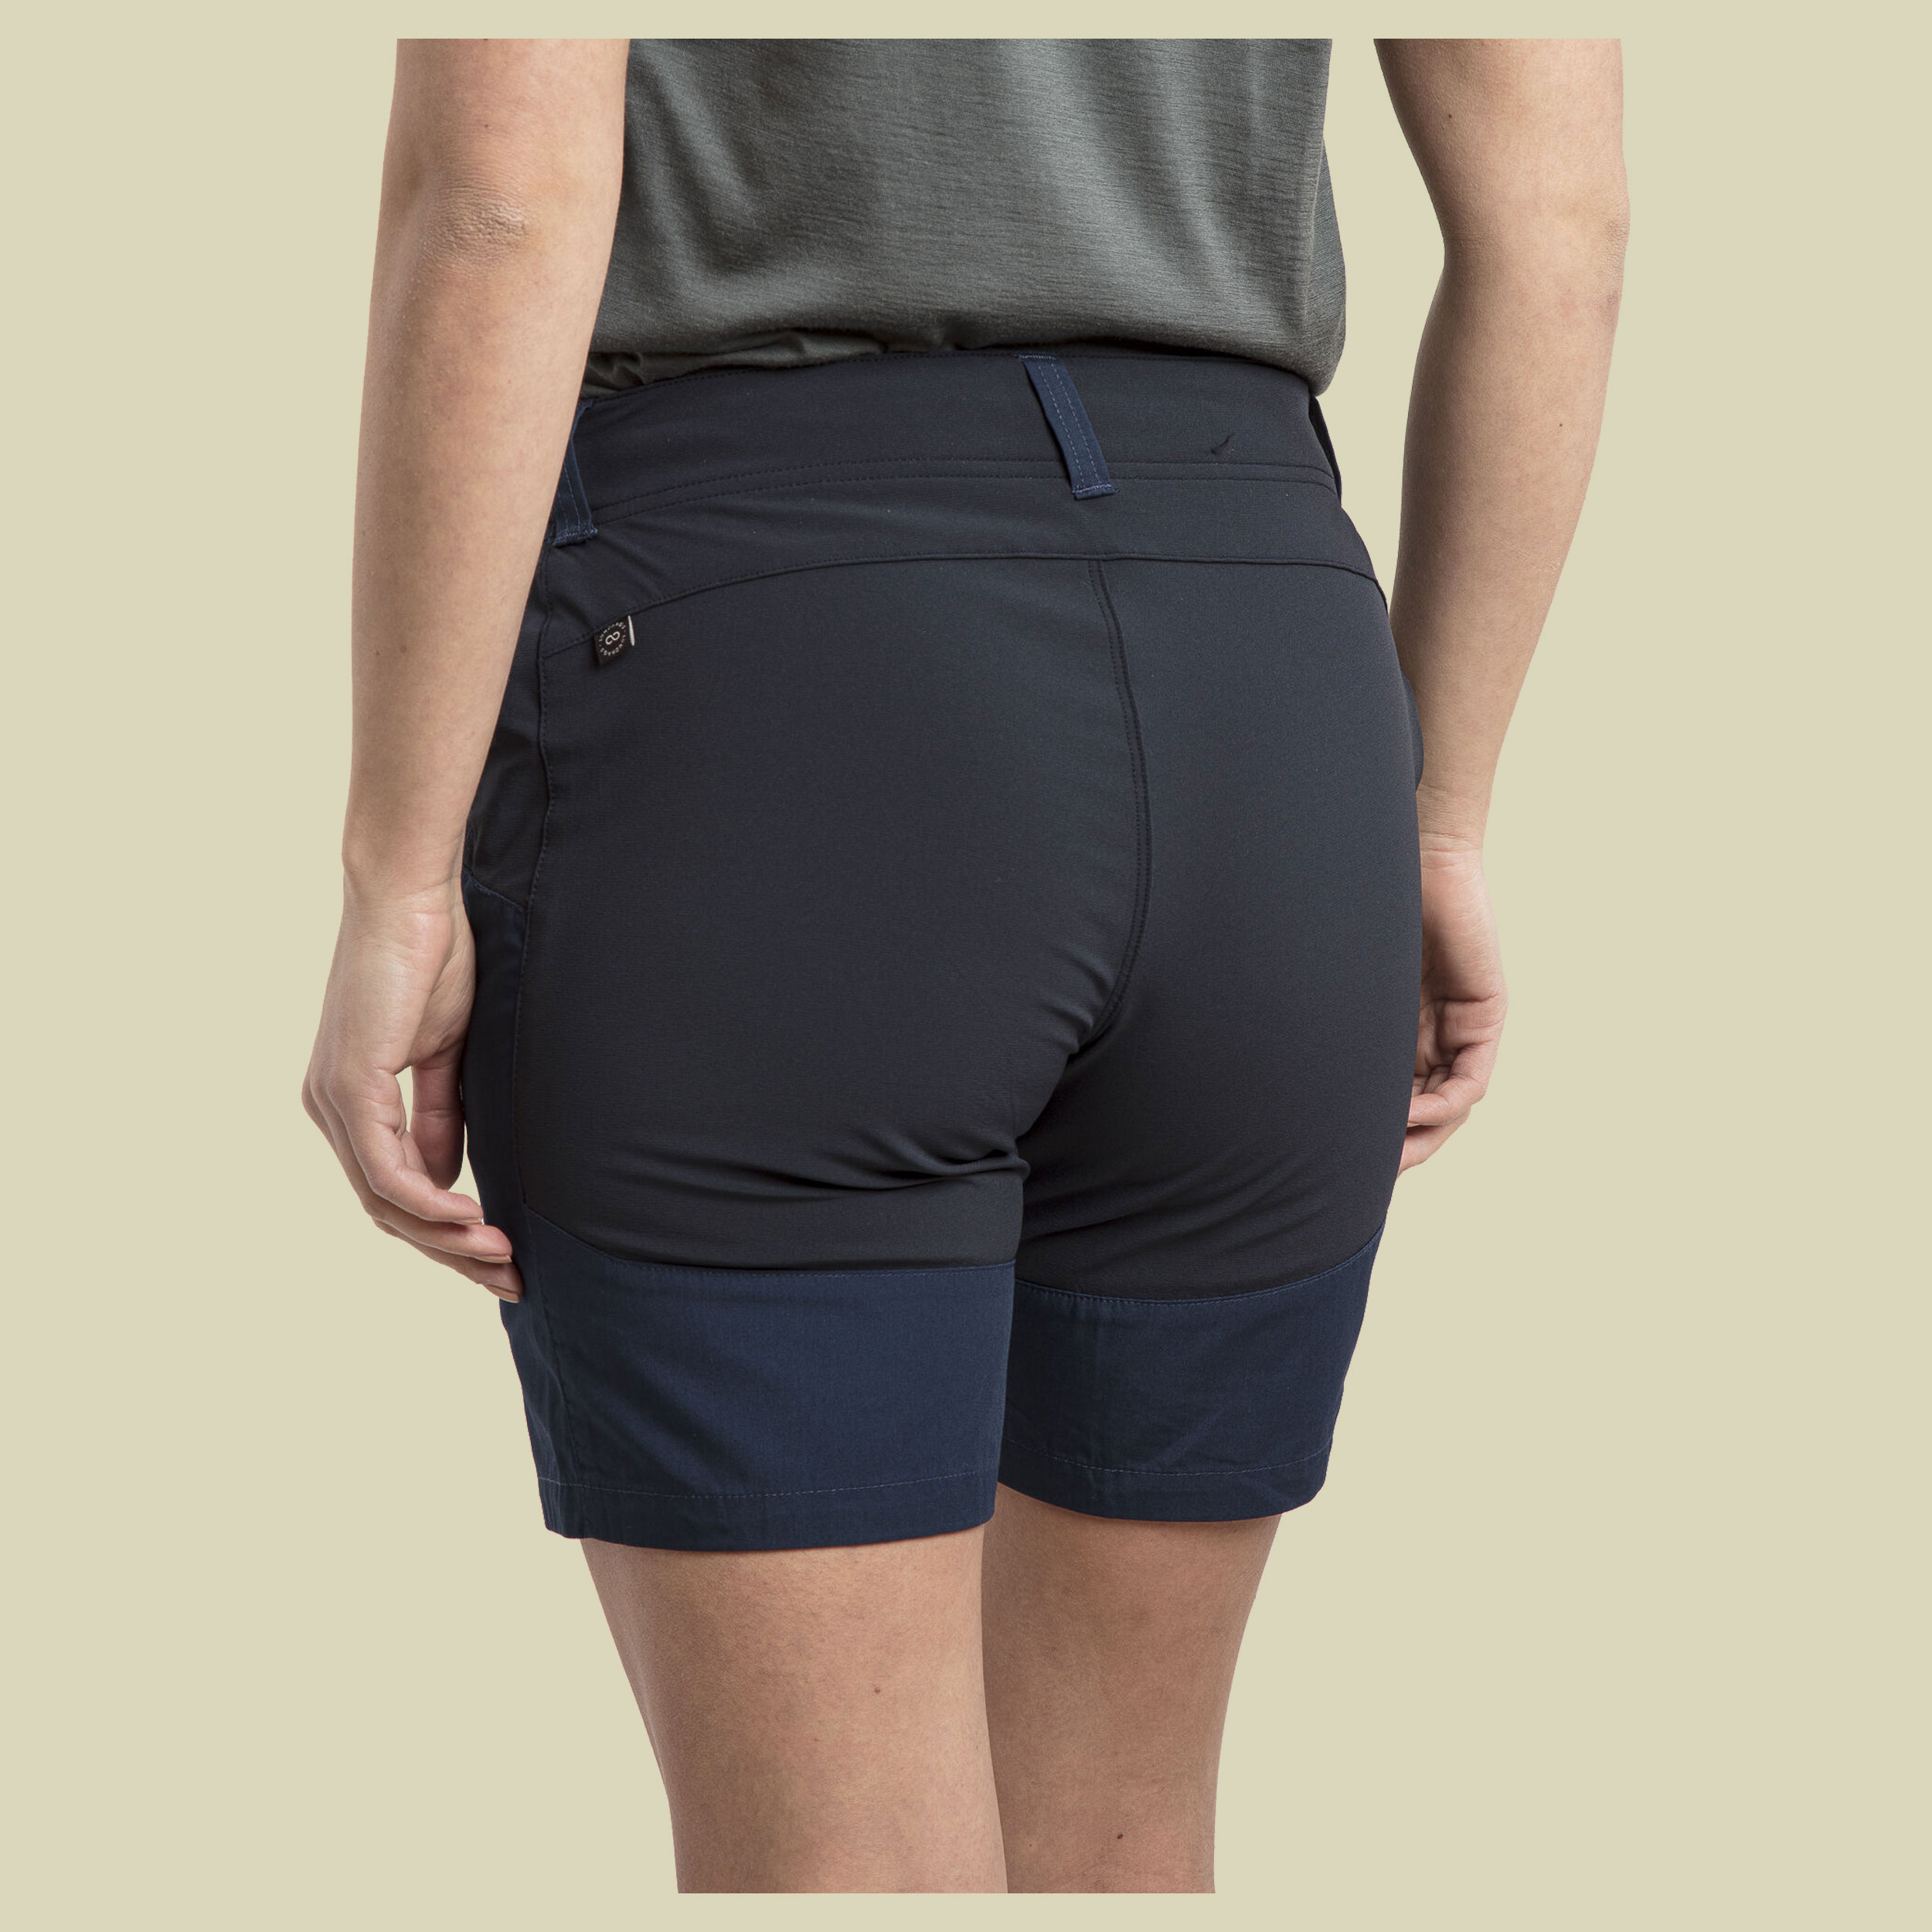 Makke Lt Shorts Women Größe 38 Farbe light navy/deep blue